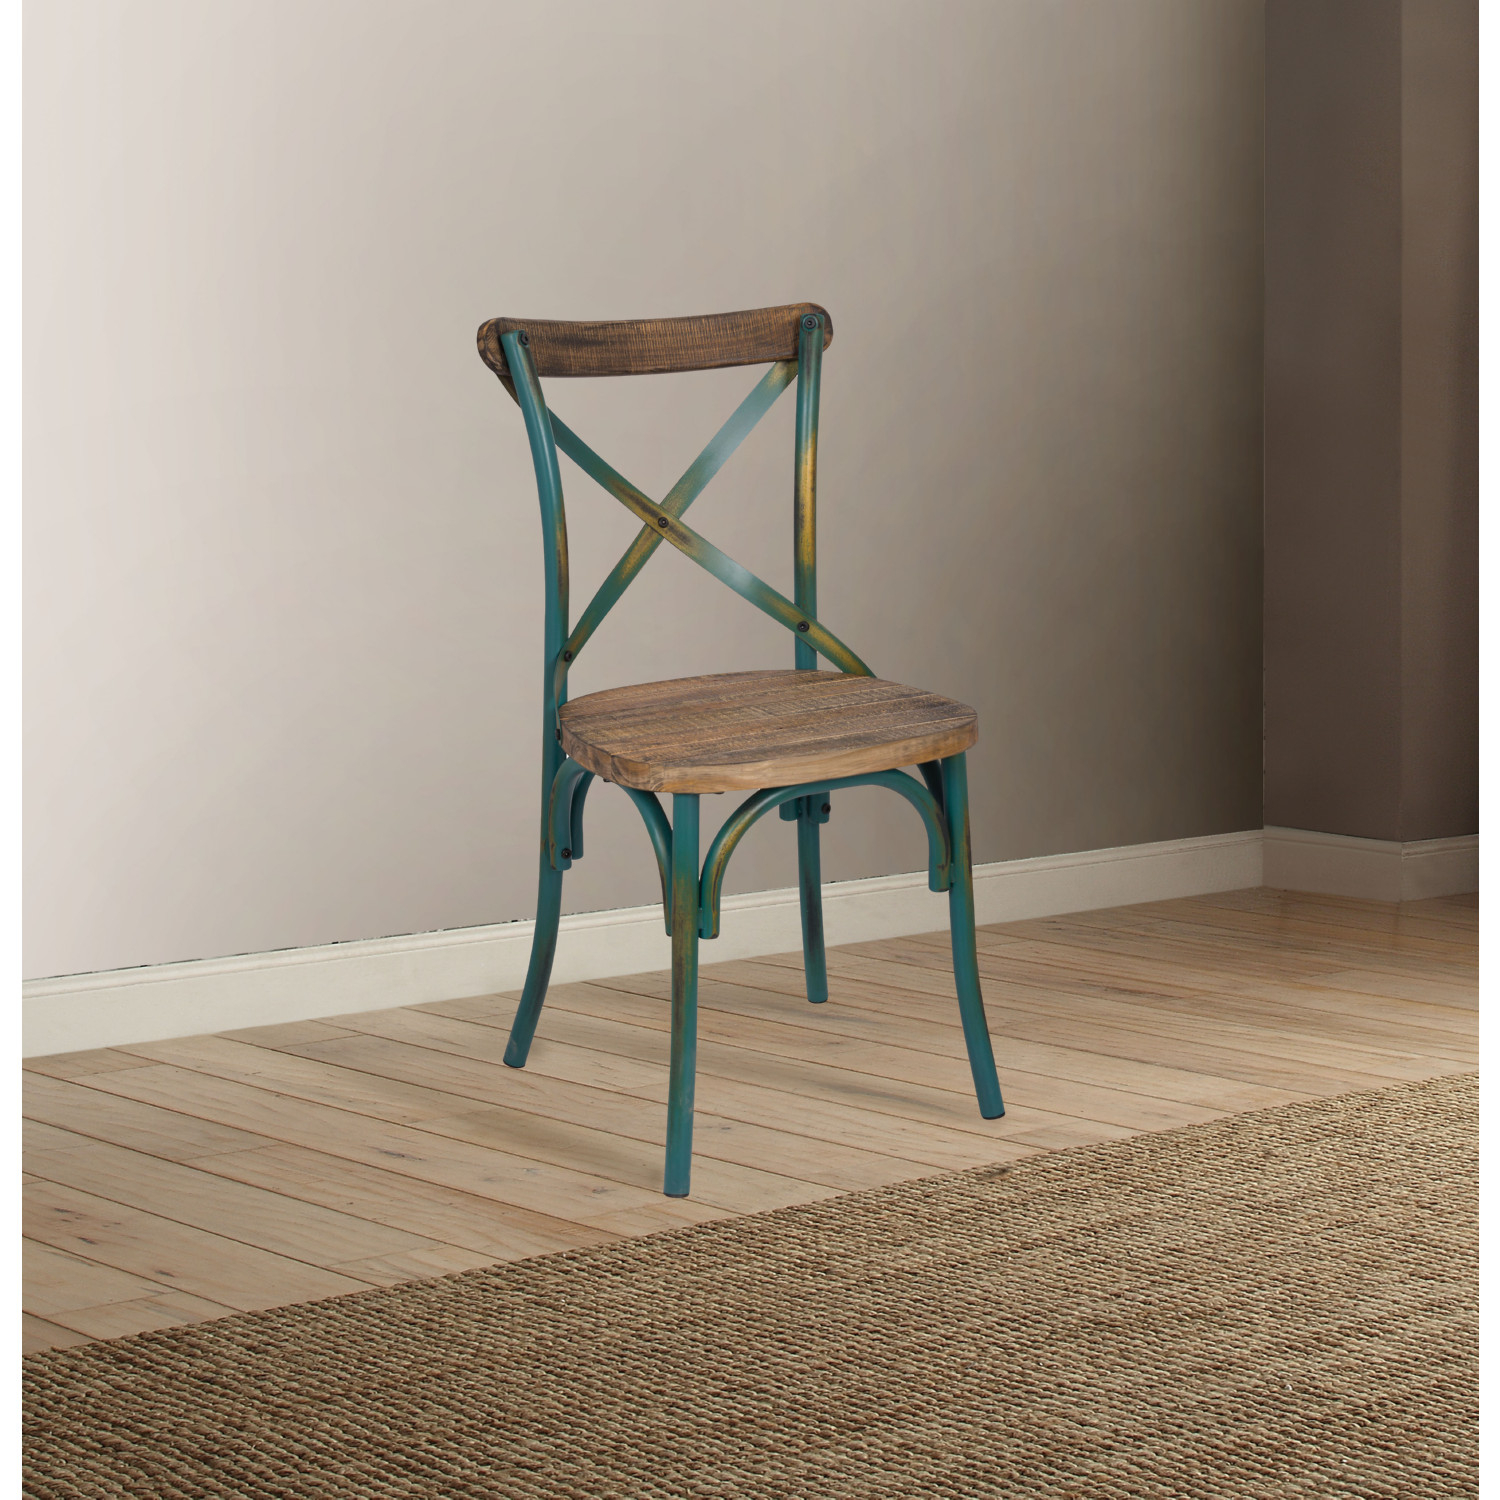 ACME Furniture 96805 Zaire Bar Chair Copper